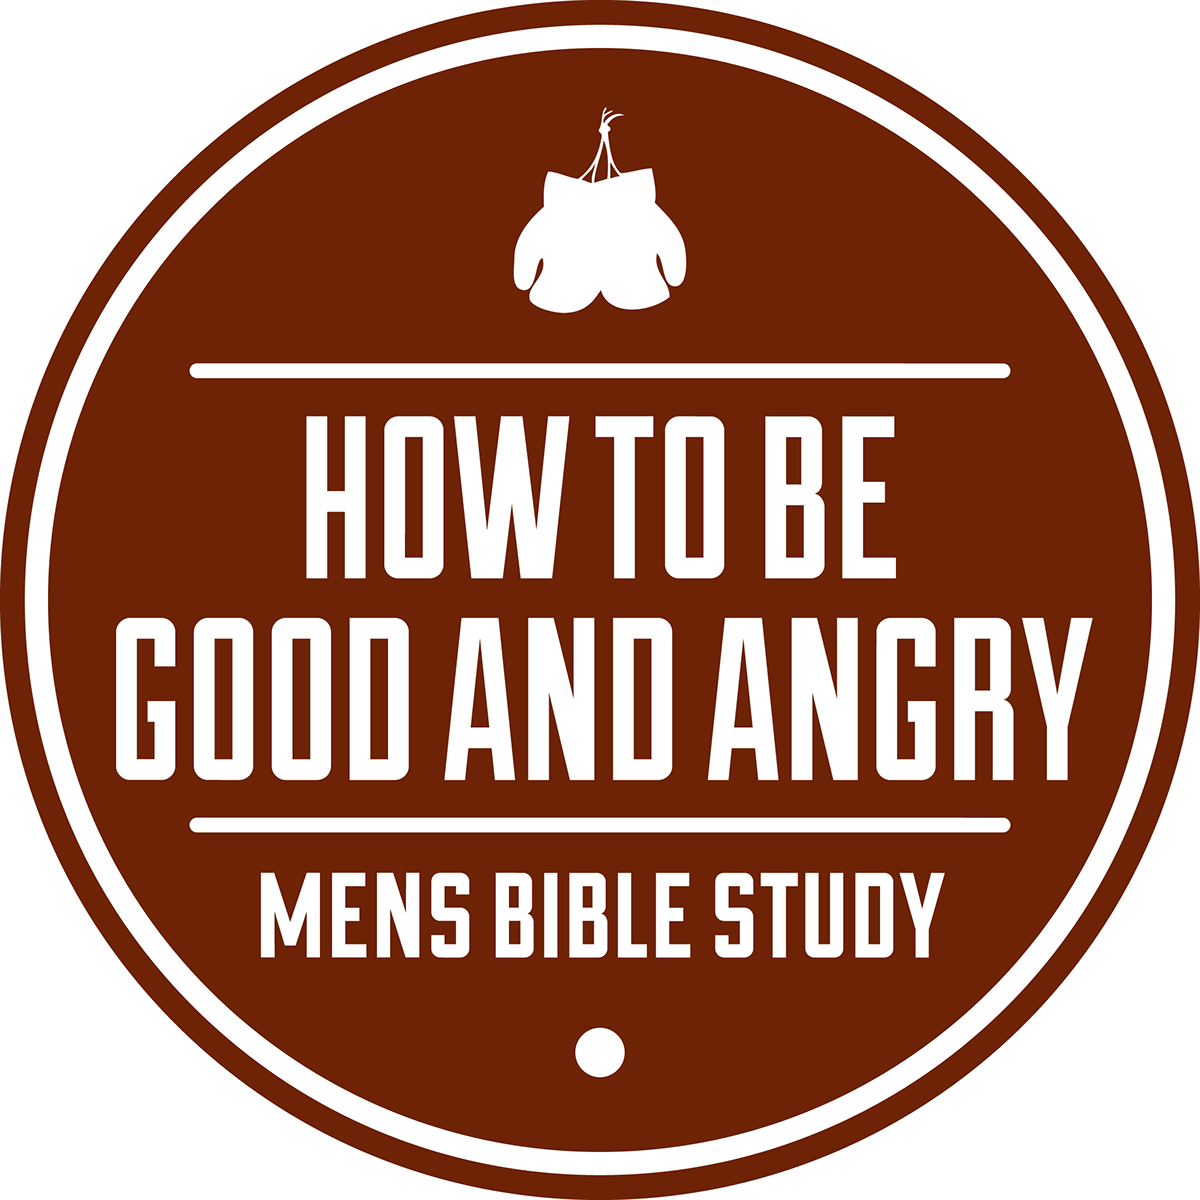 bible study Boxing angry Good men